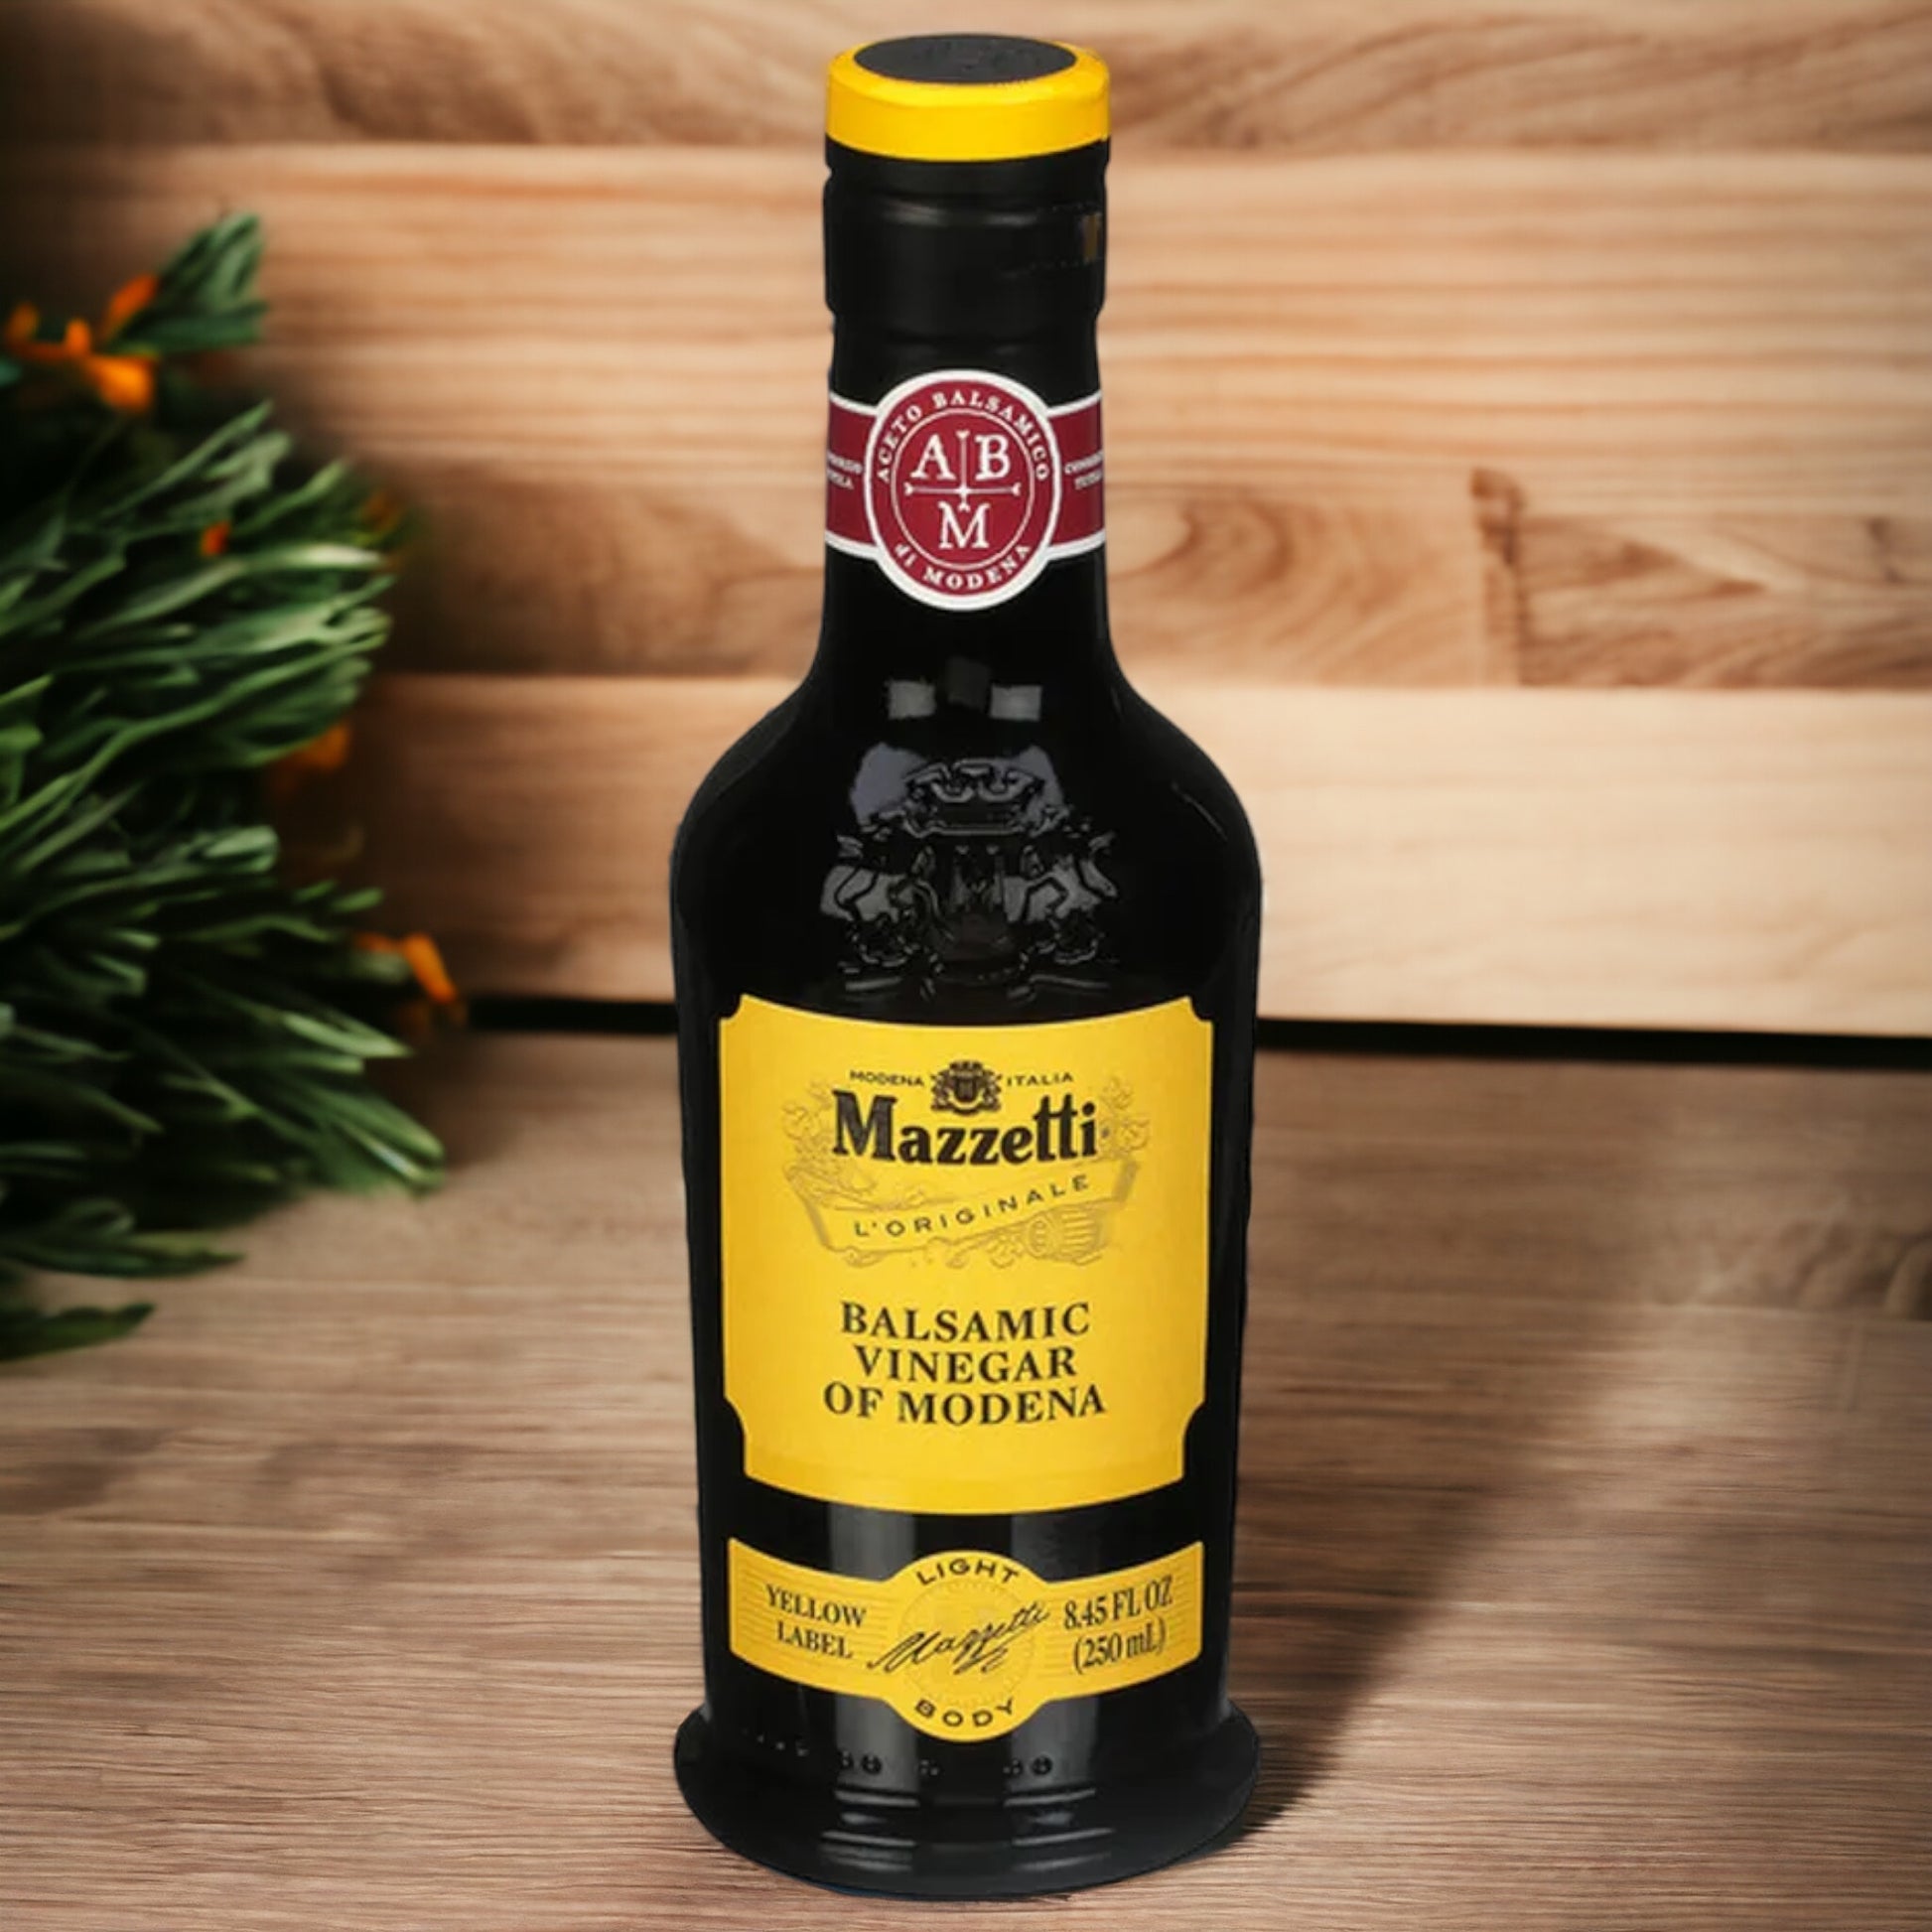 Yellow Label Balsamic Vinegar of Modena - Marisa's Shopping Network 